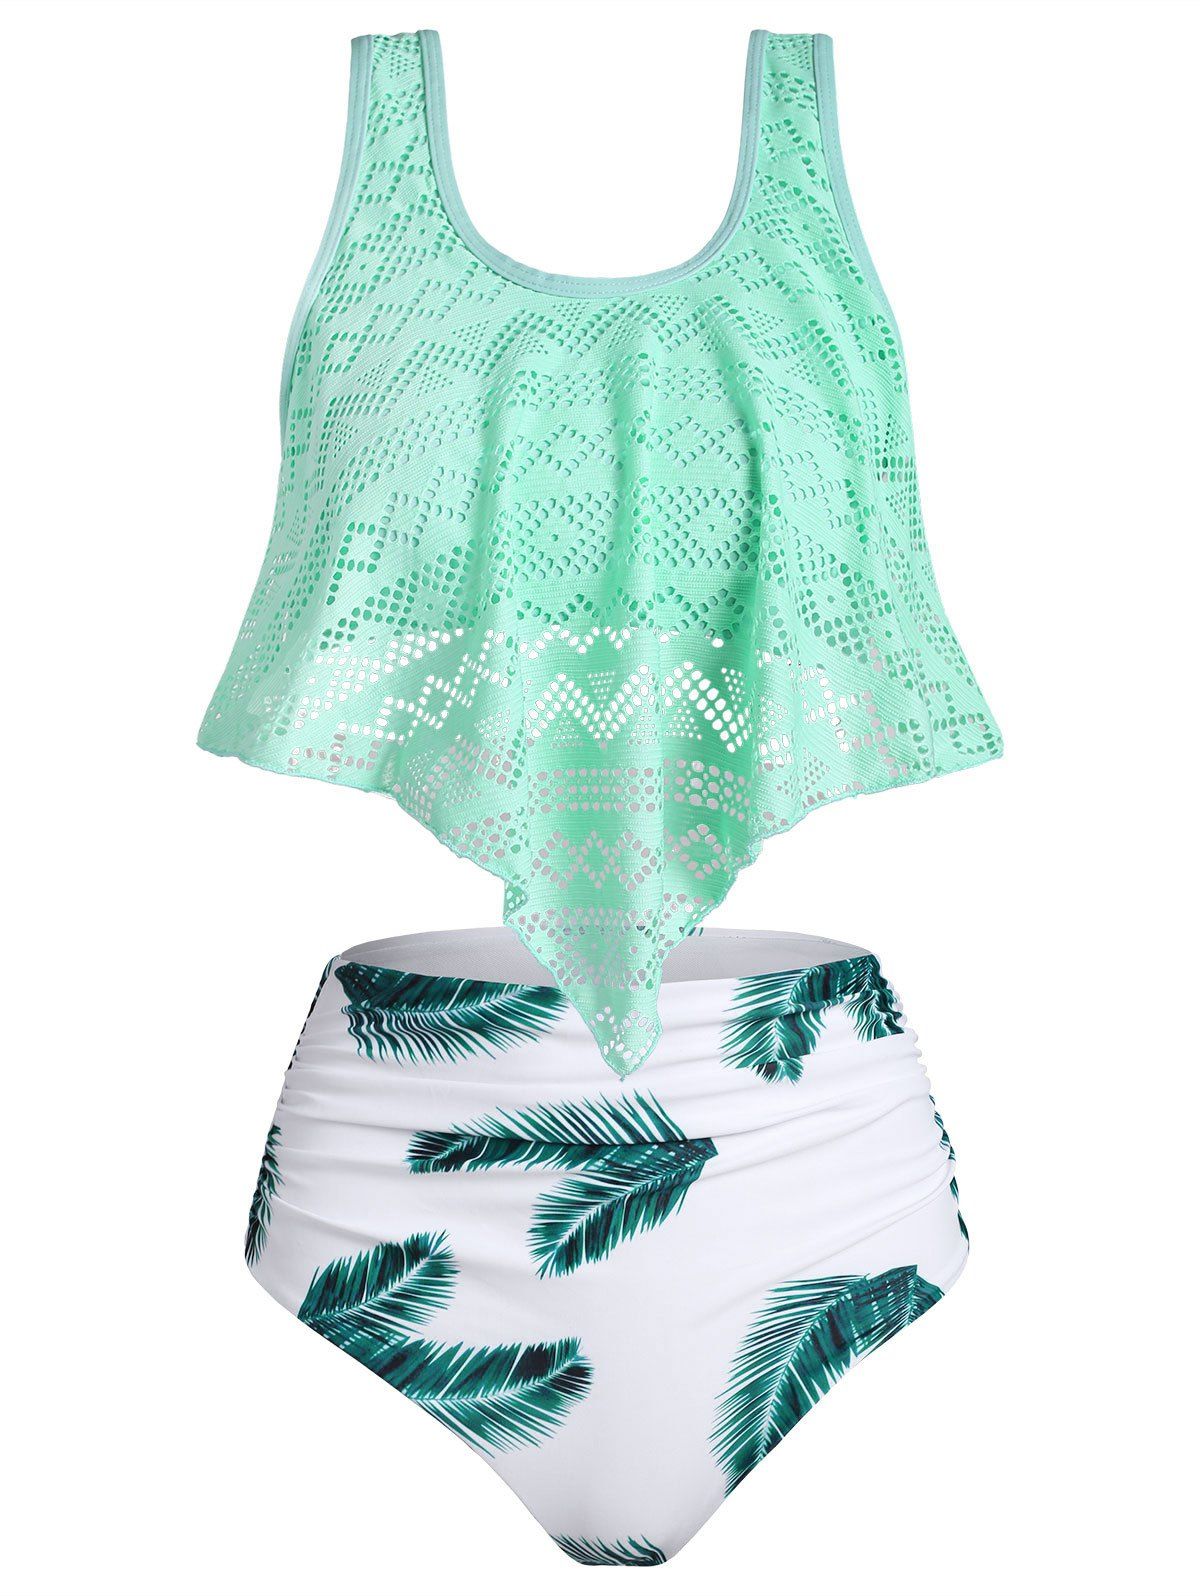 Perforated Leaf Print Ruched Tankini Swimsuit - LIGHT AQUAMARINE S